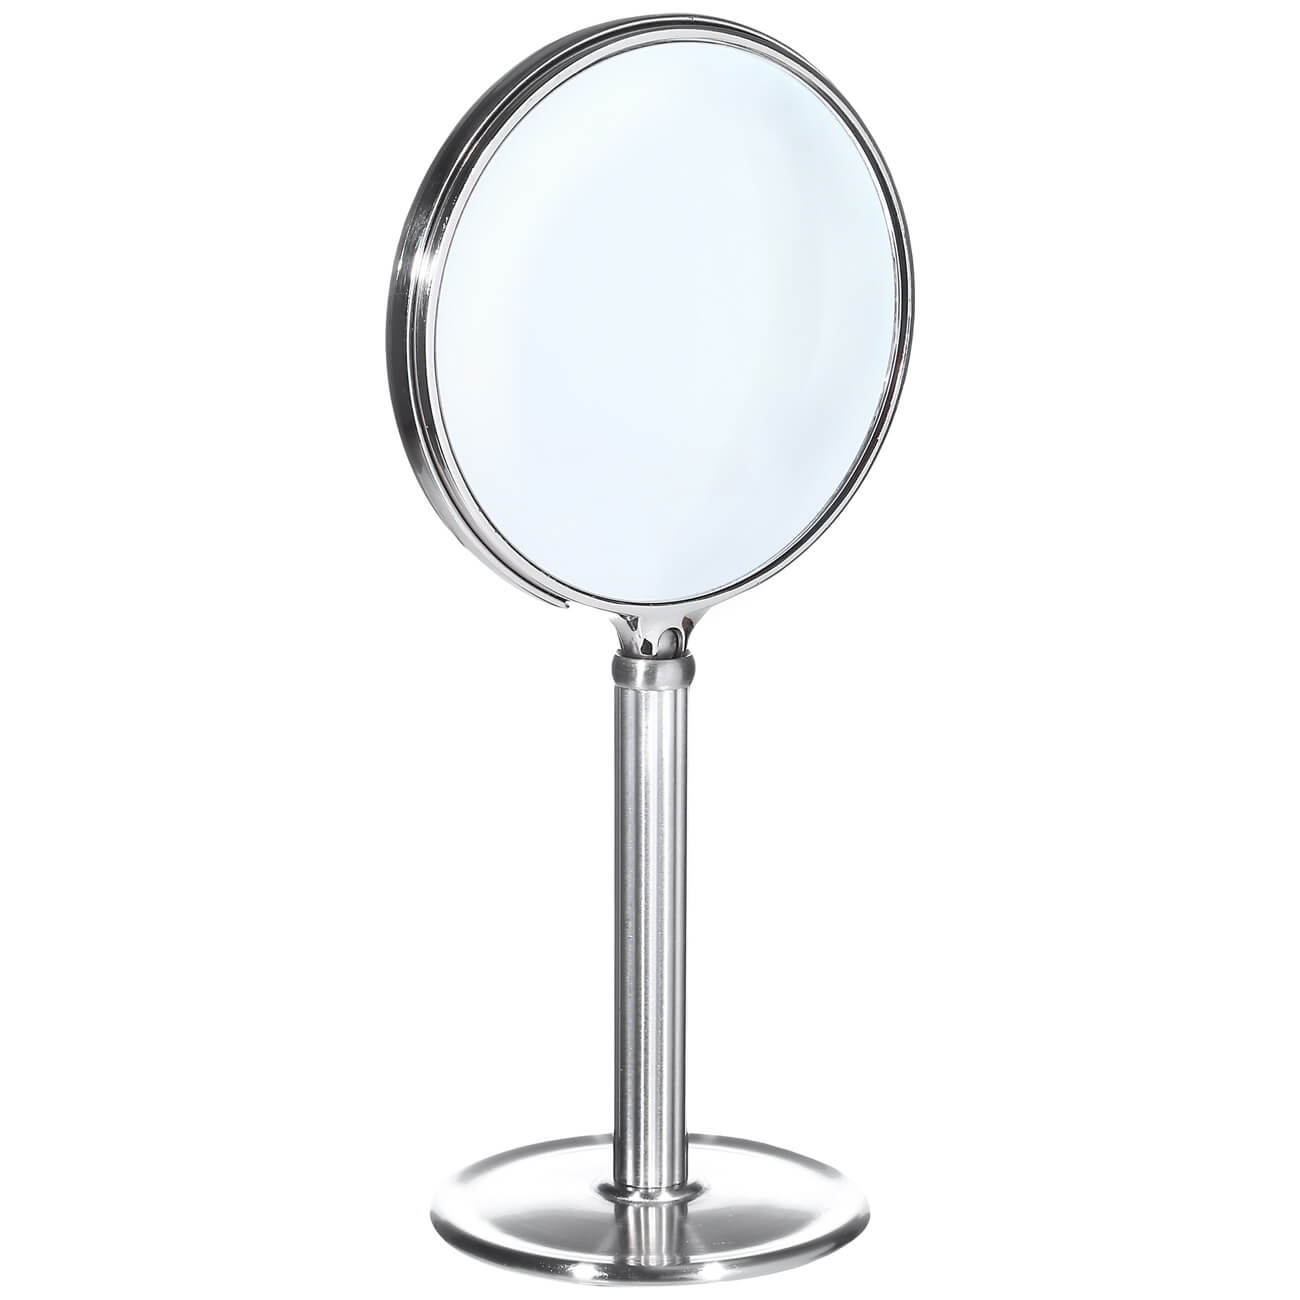 Kuchenland Зеркало настольное, 17 см, двустороннее, на ножке, металл, круглое, Fantastic